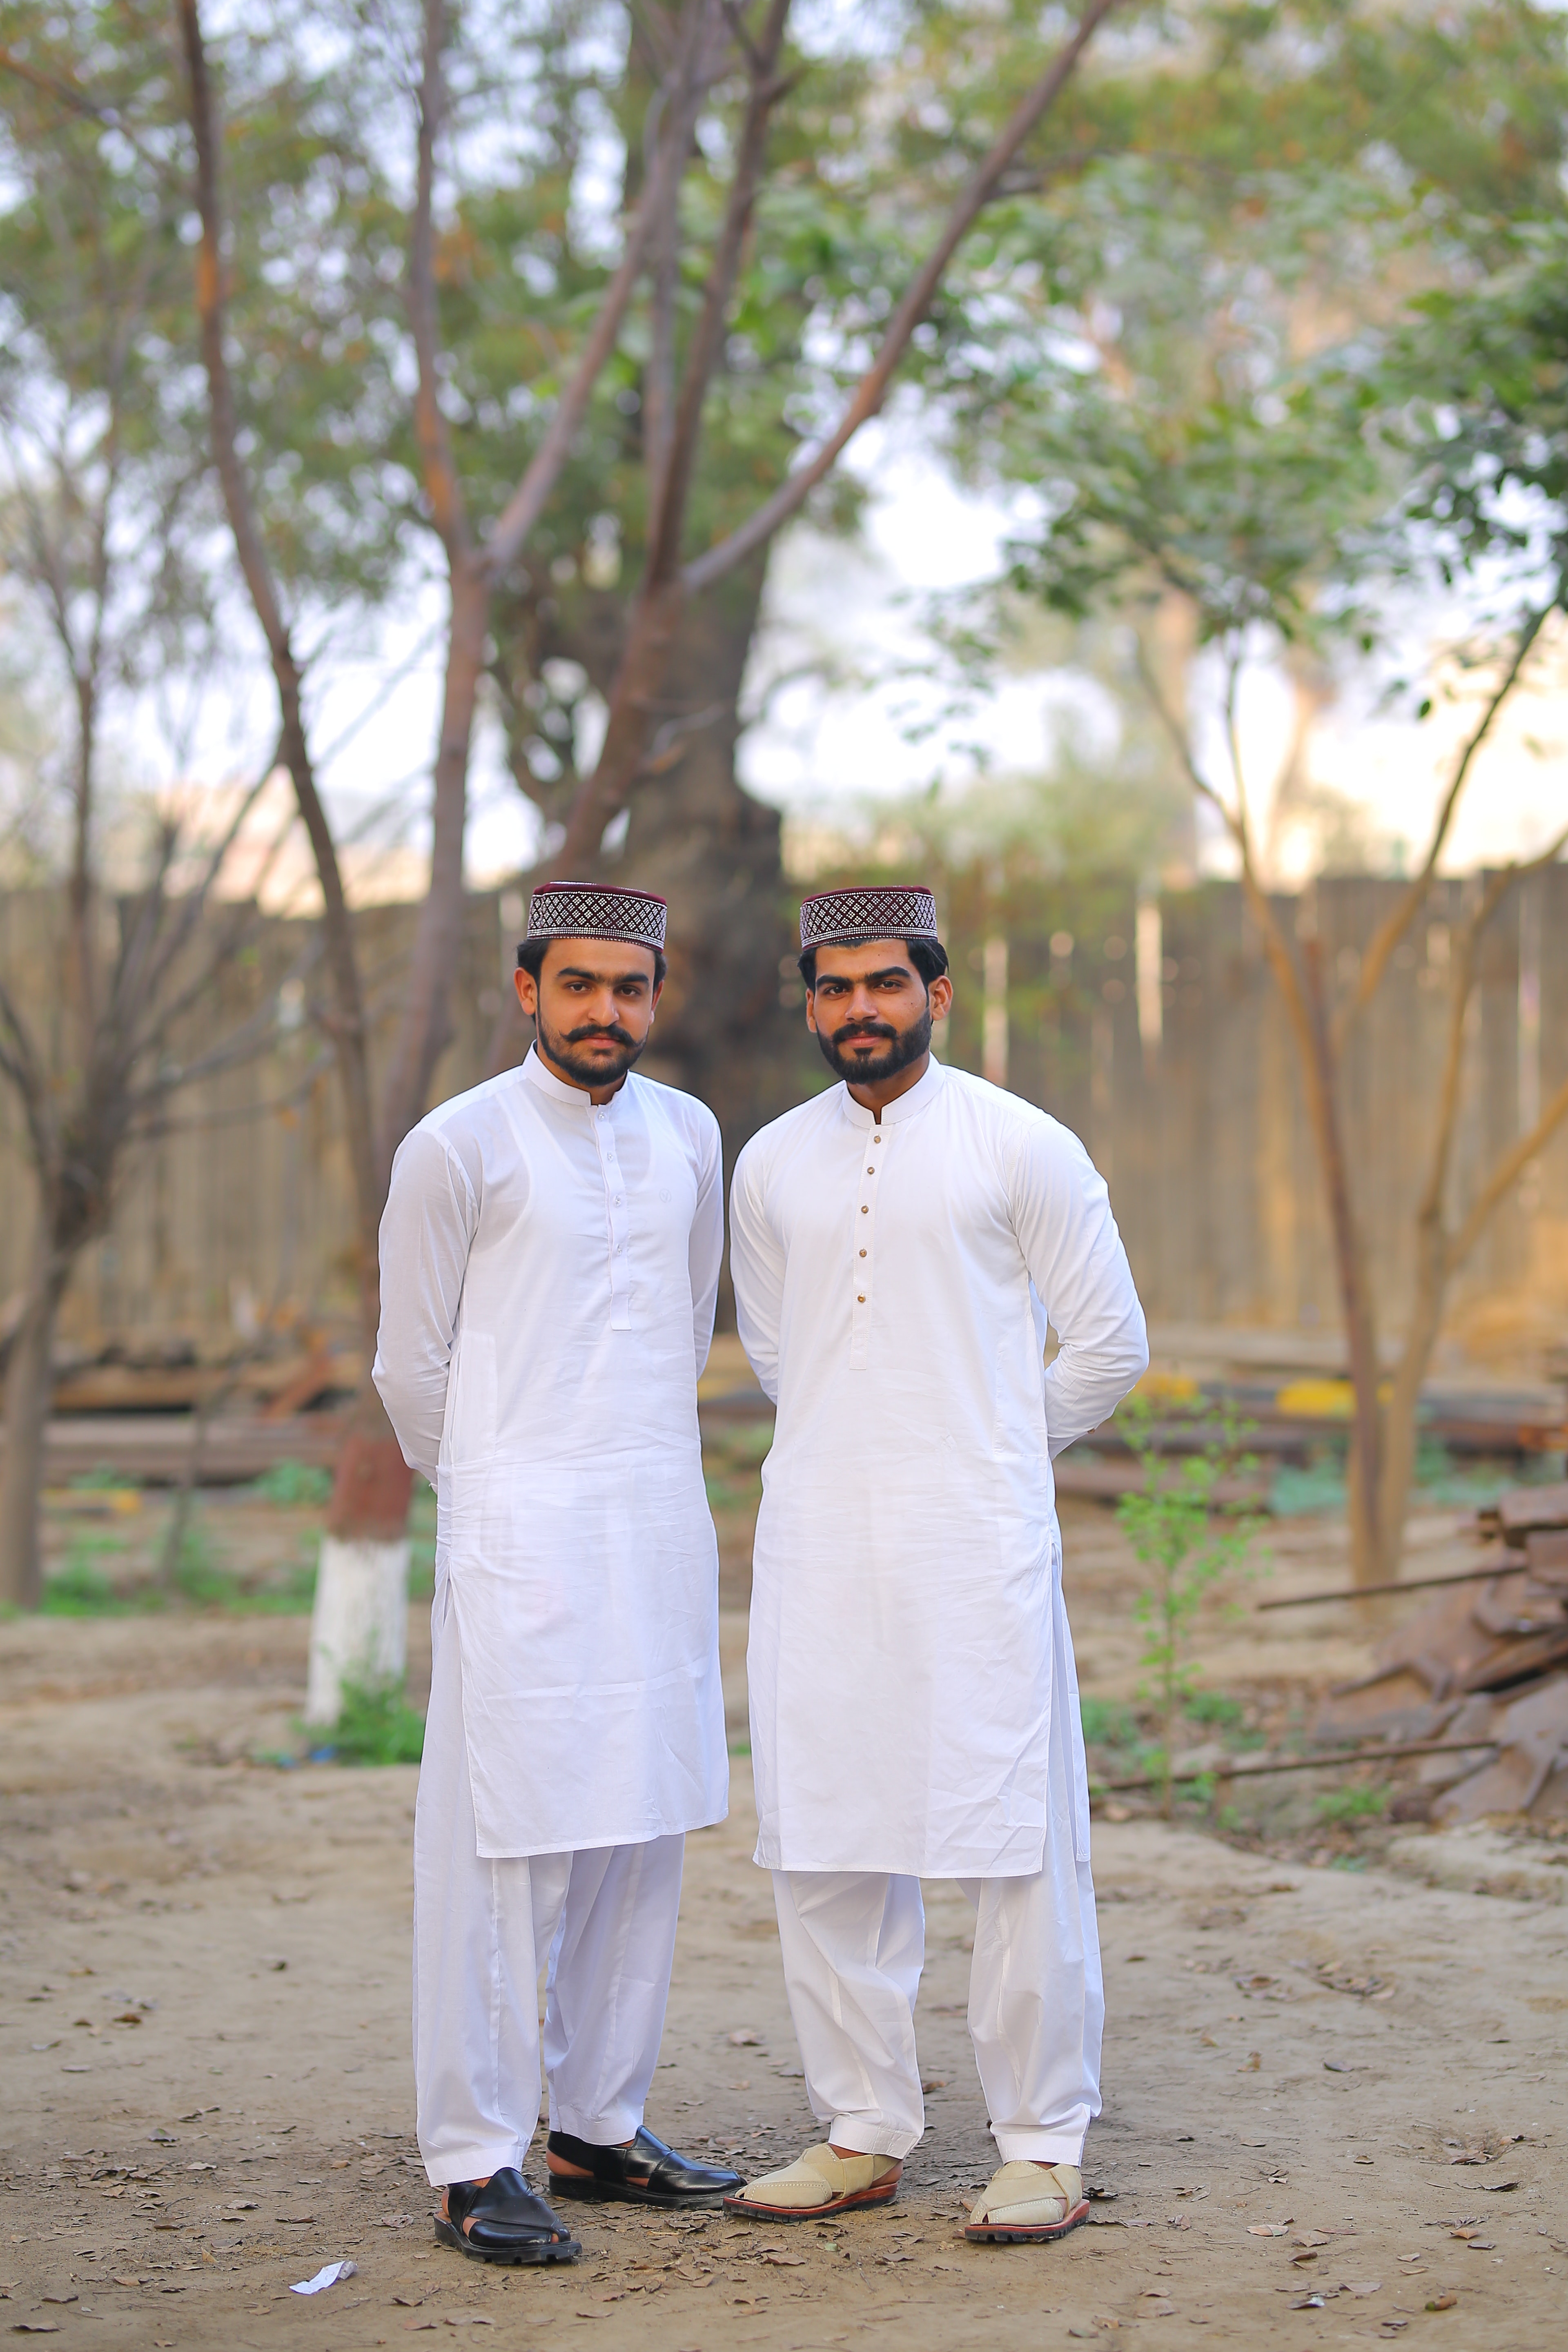 Pakistani men in Shalwar Kameez